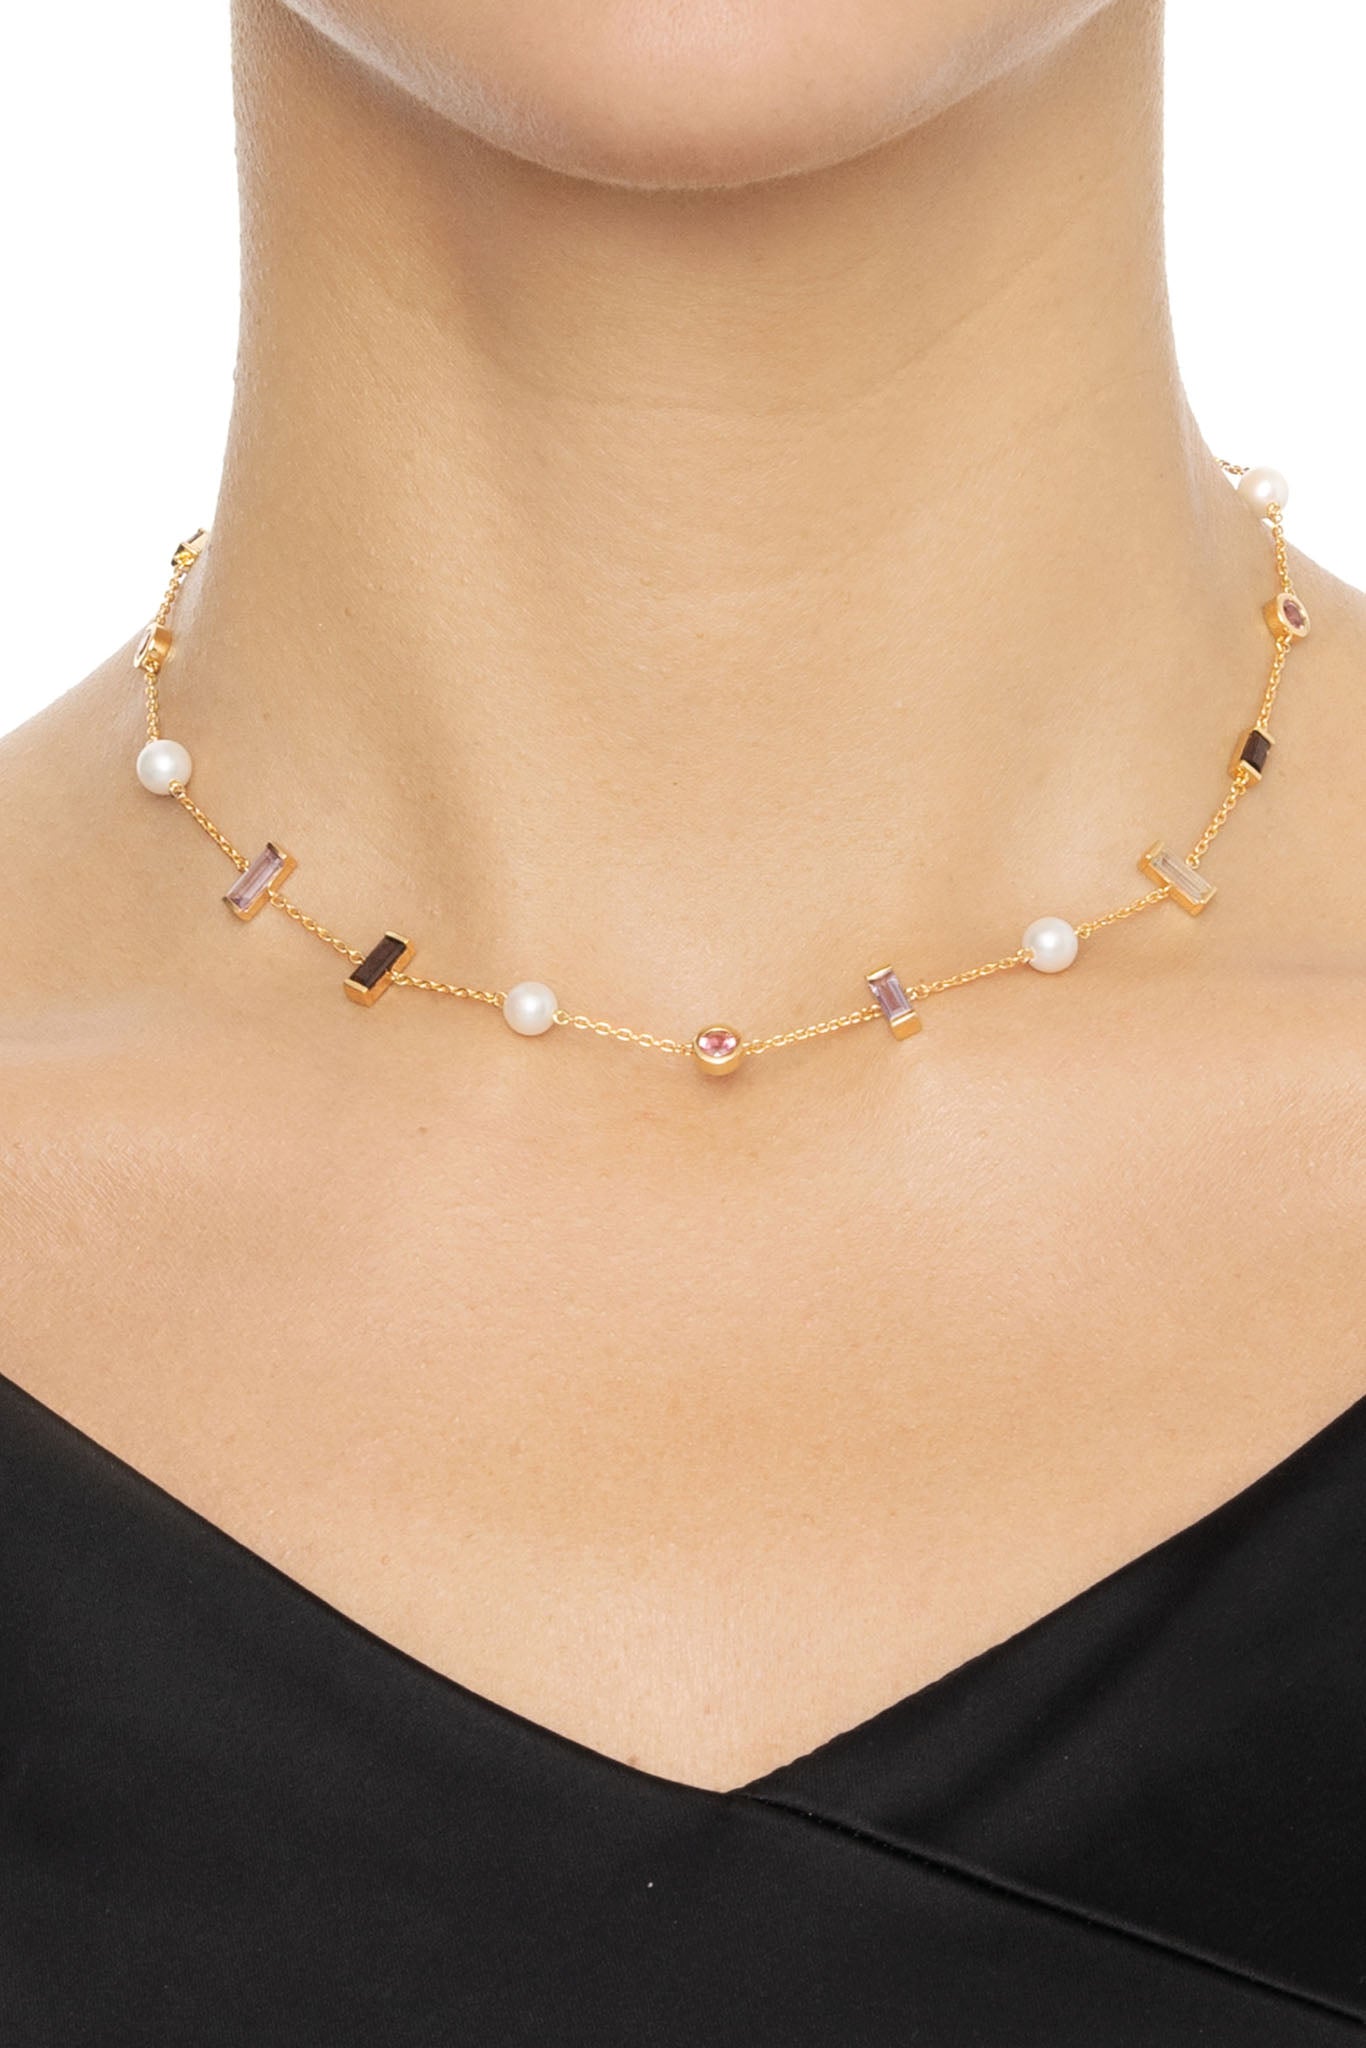 Efva Attling Dreams & Pearls Necklace kultainen kaulakoru